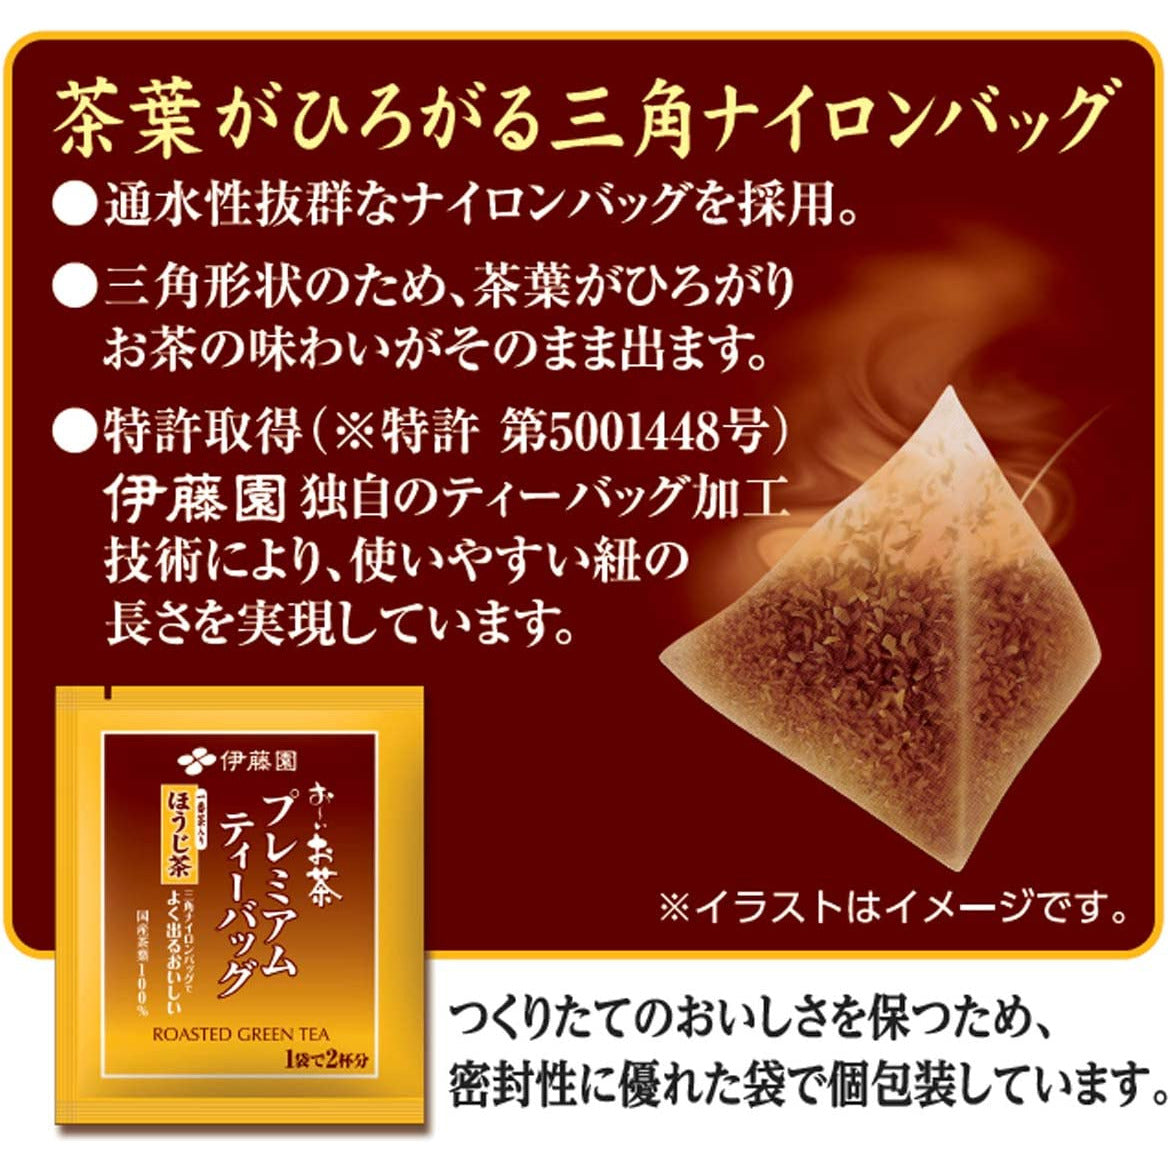 Itoen Oi Ocha Premium Tea Bag Hojicha with first tea 1.8g x 20 bags